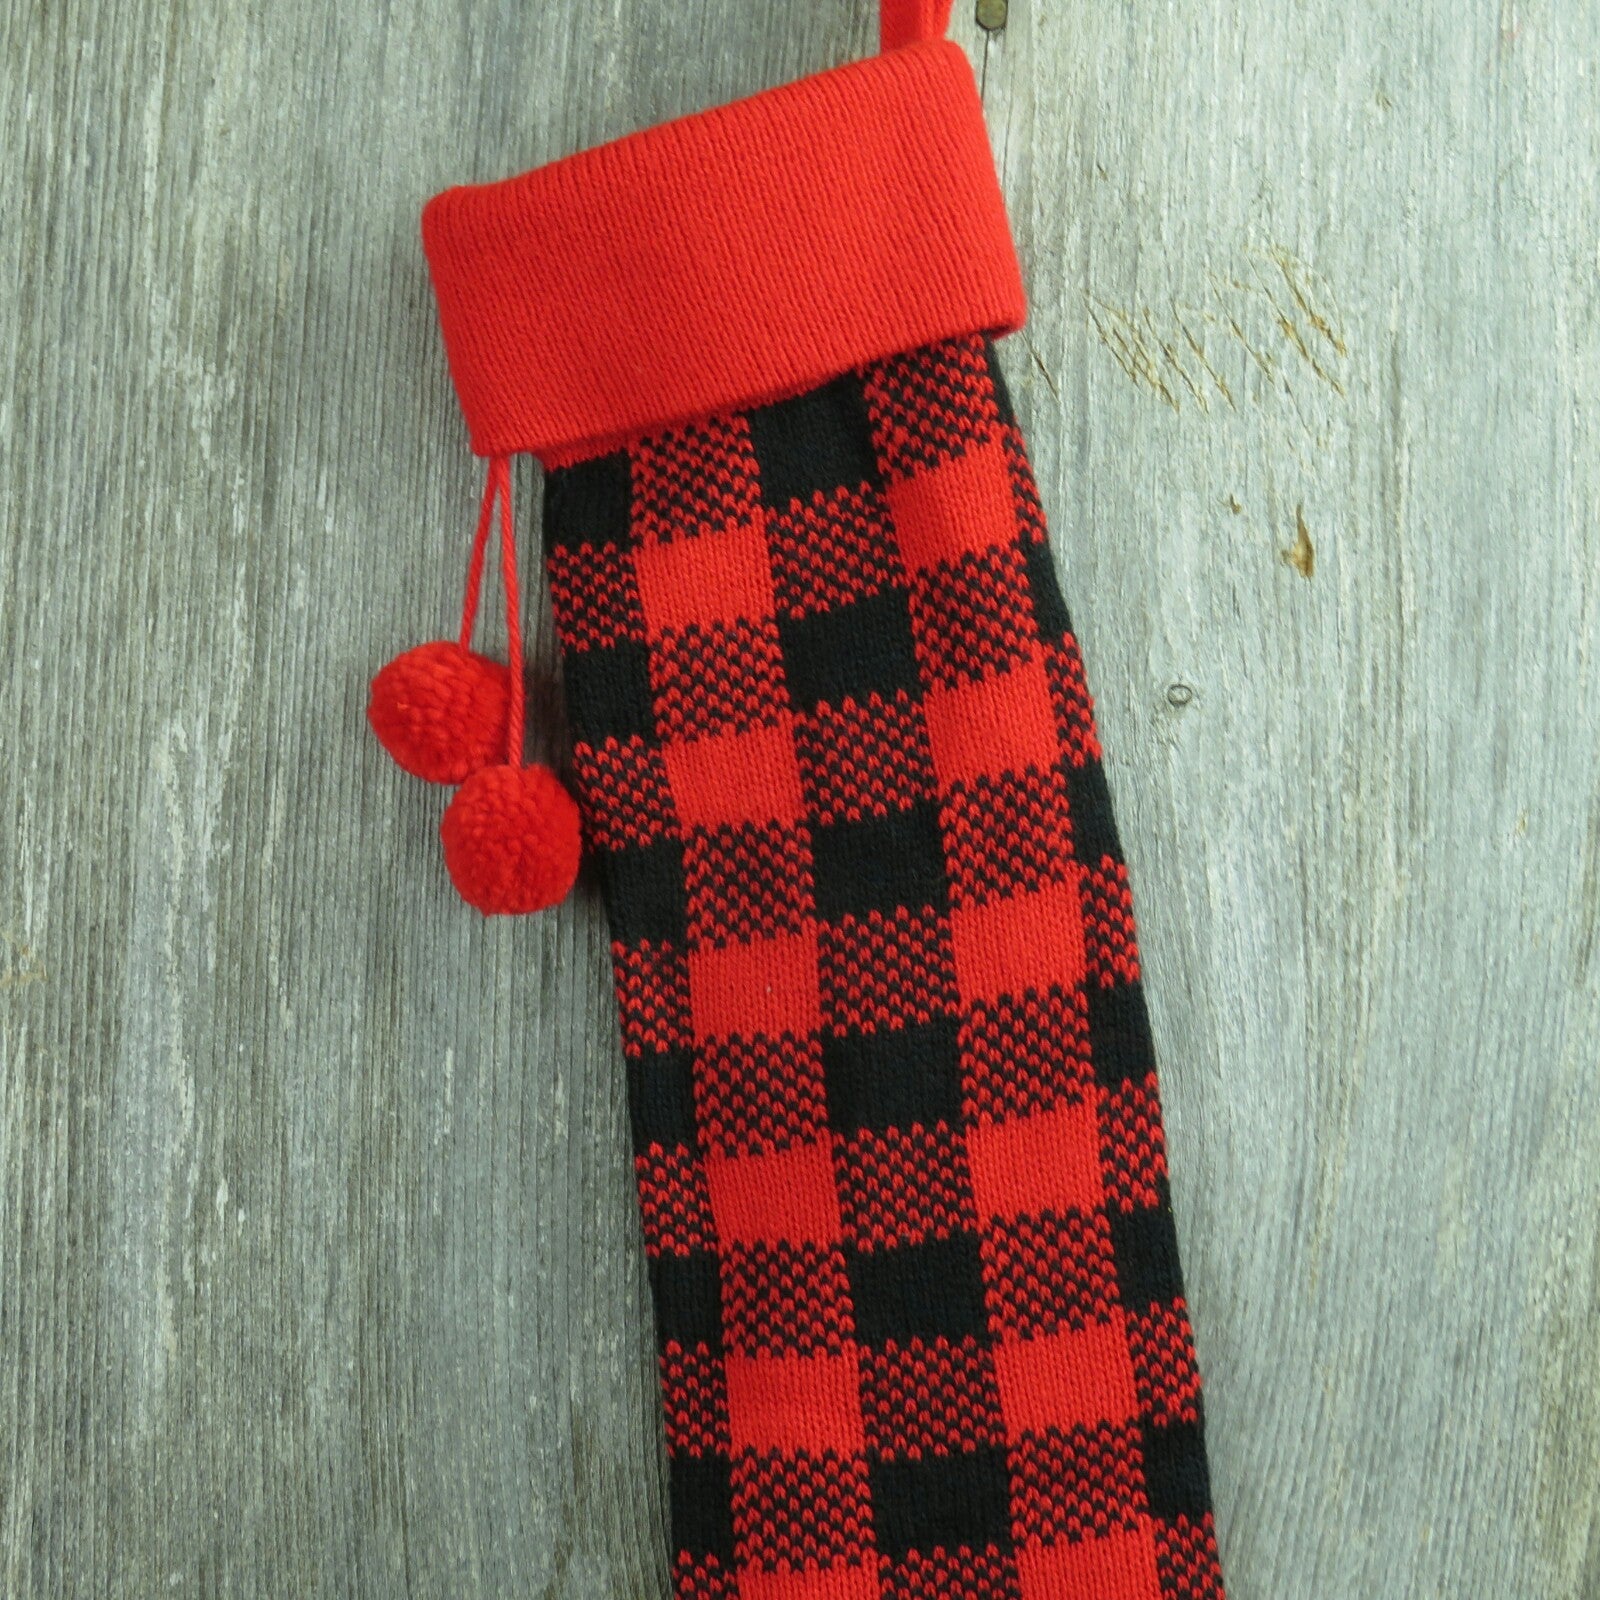 Vintage Buffalo Plaid Knit Stocking Christmas Depart 56 Red Black Logger Cabin Lodge Holiday Decor 1980s - At Grandma's Table